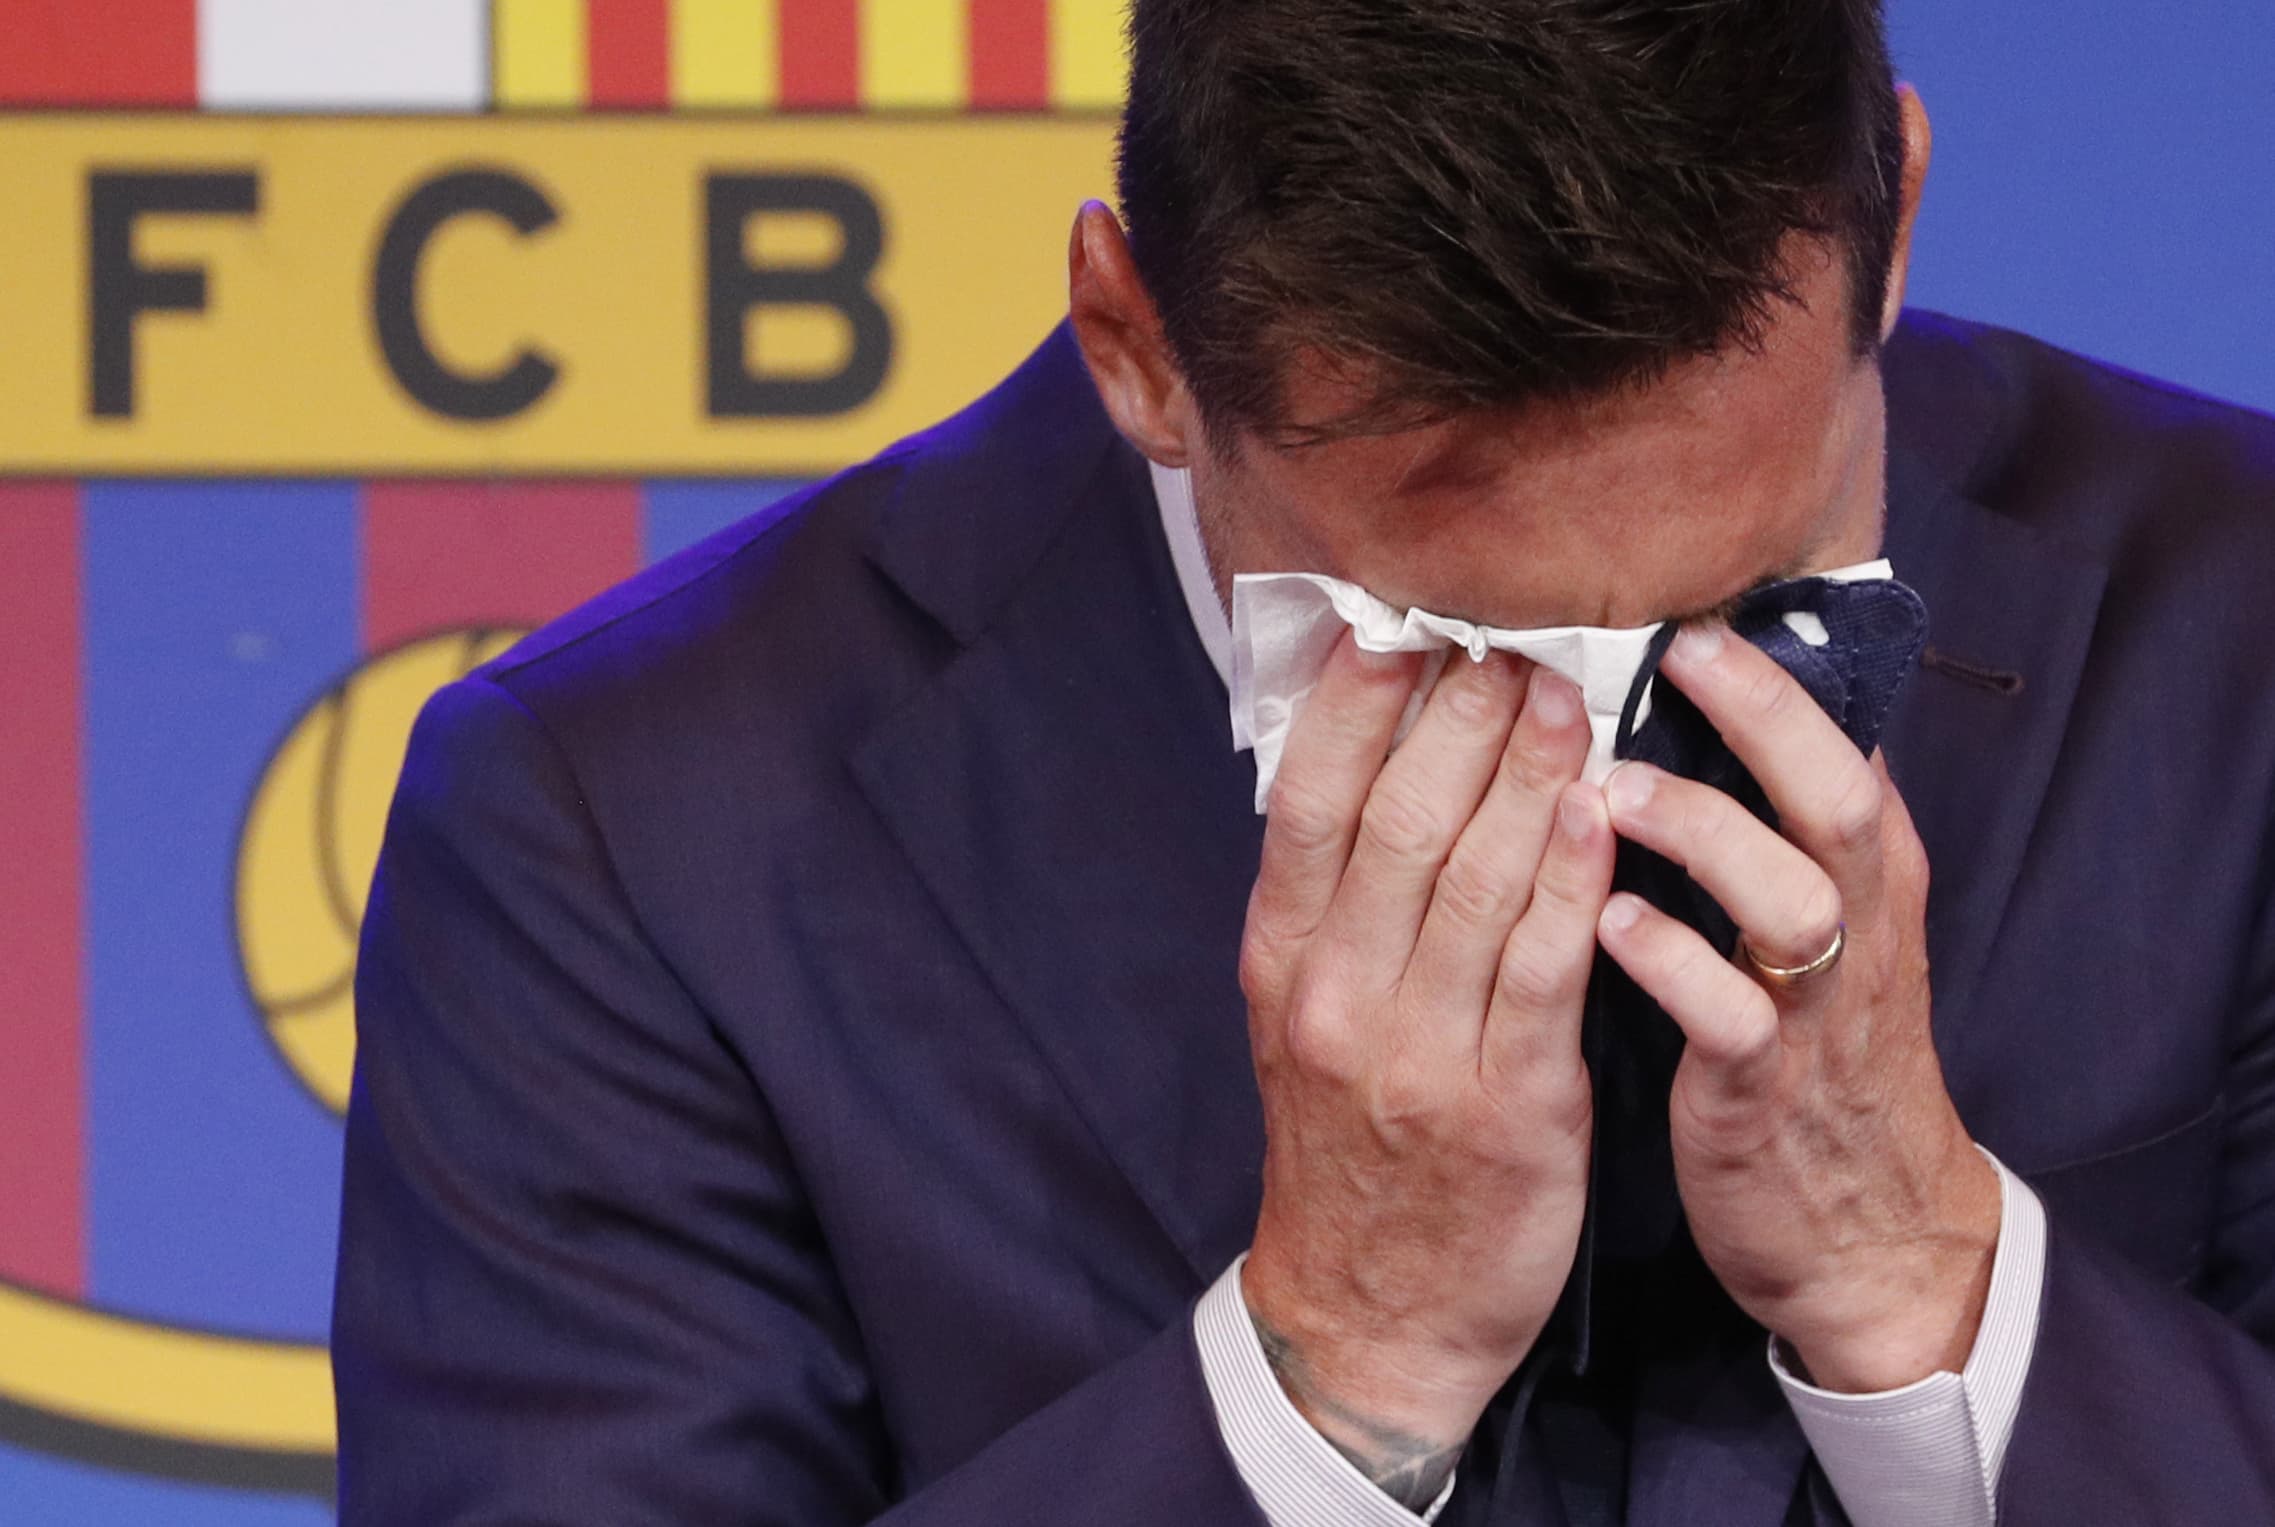 Tears, standing ovation mark Messi's farewell to Barcelona